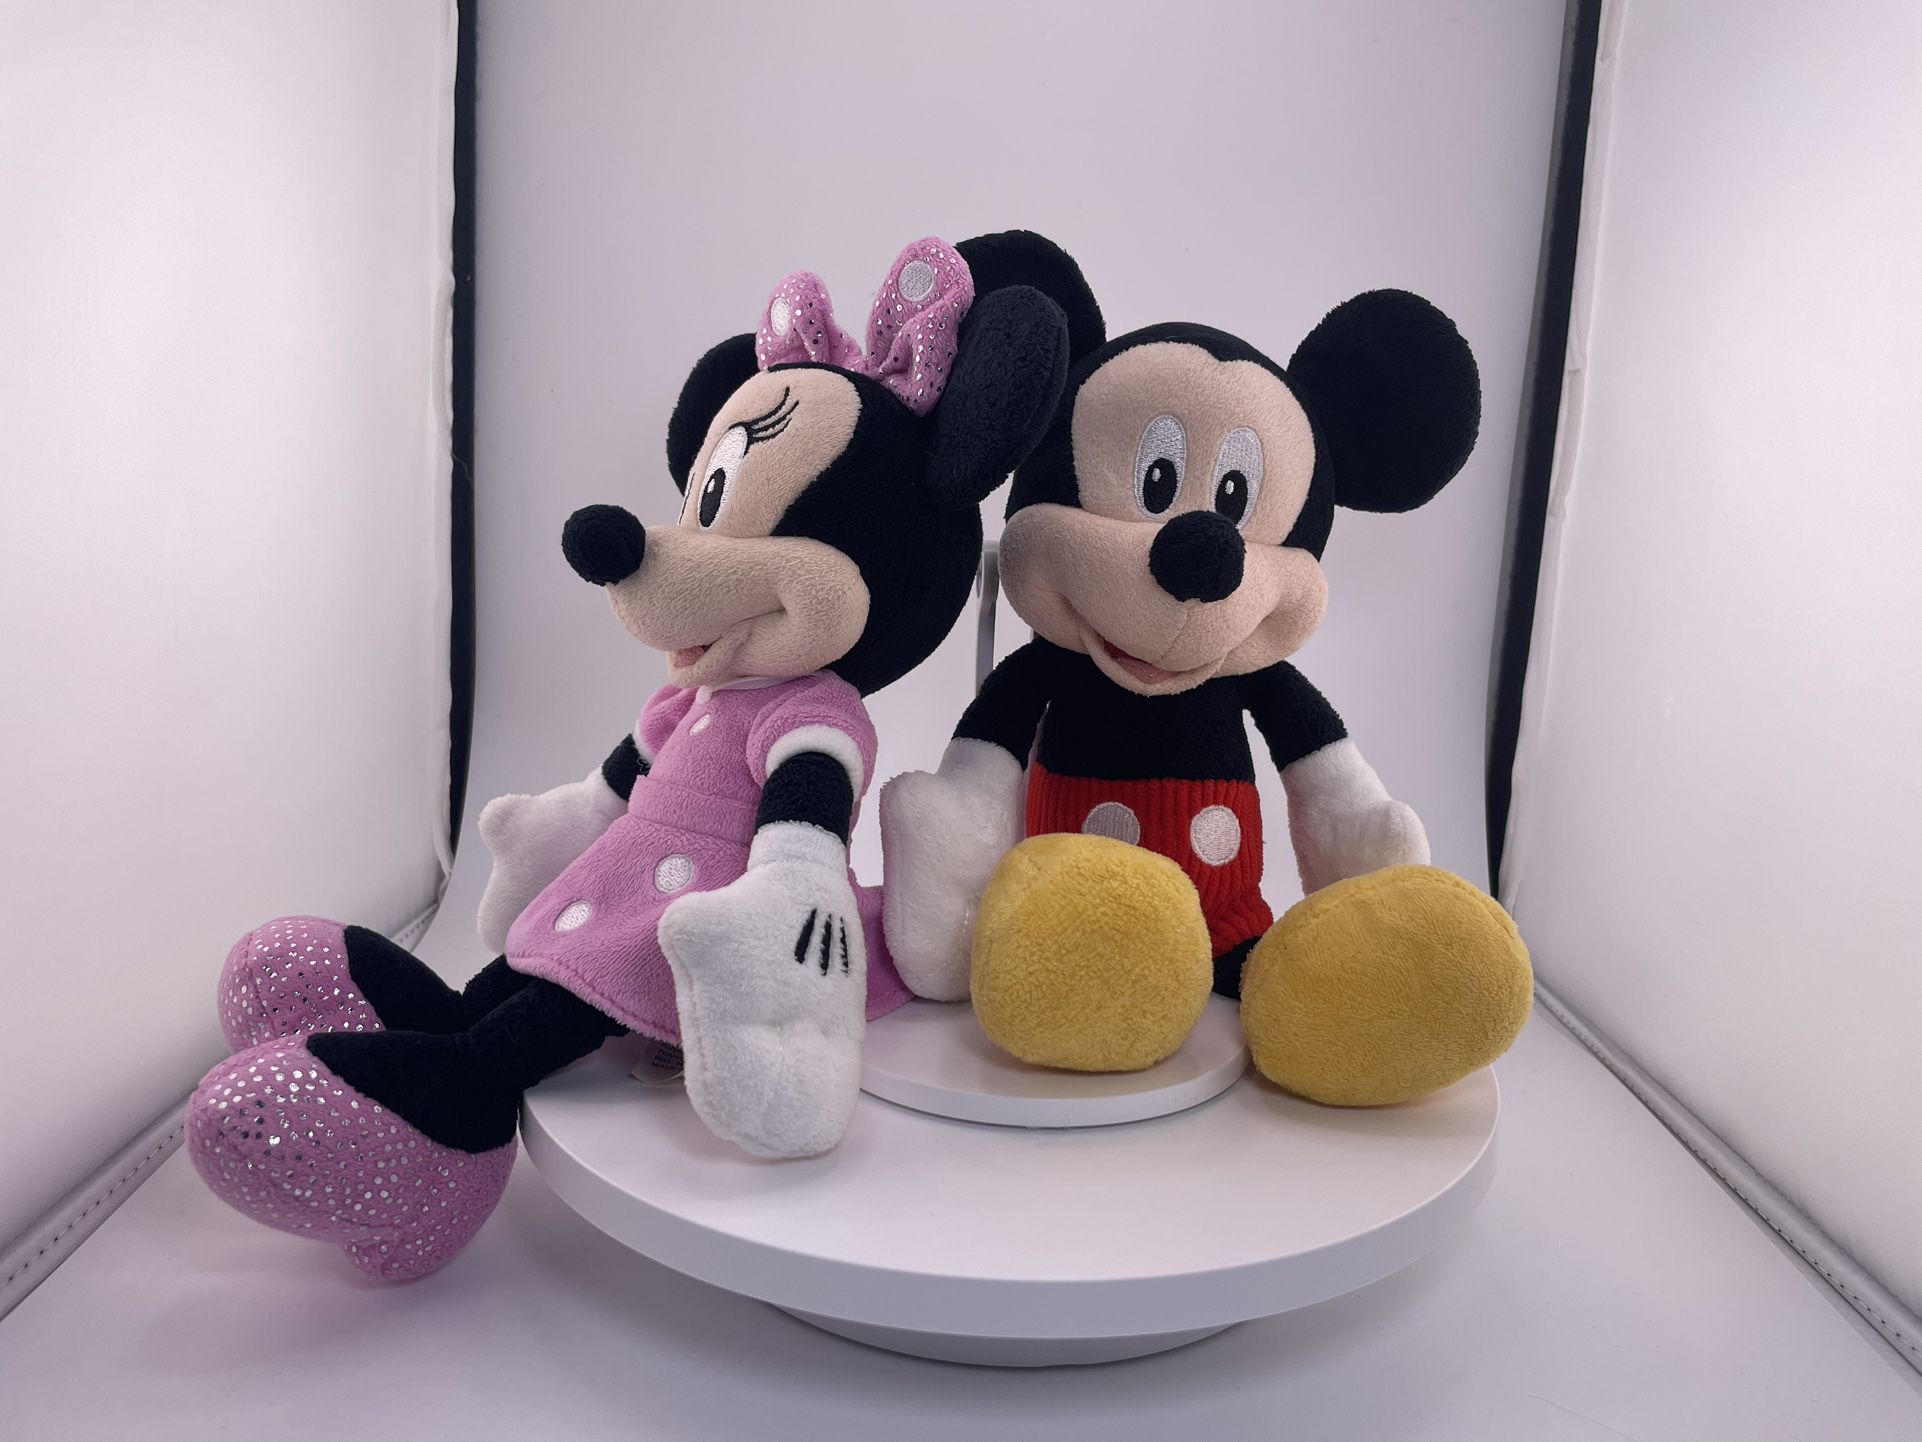 Mickey and Mini mouse stuffed animals